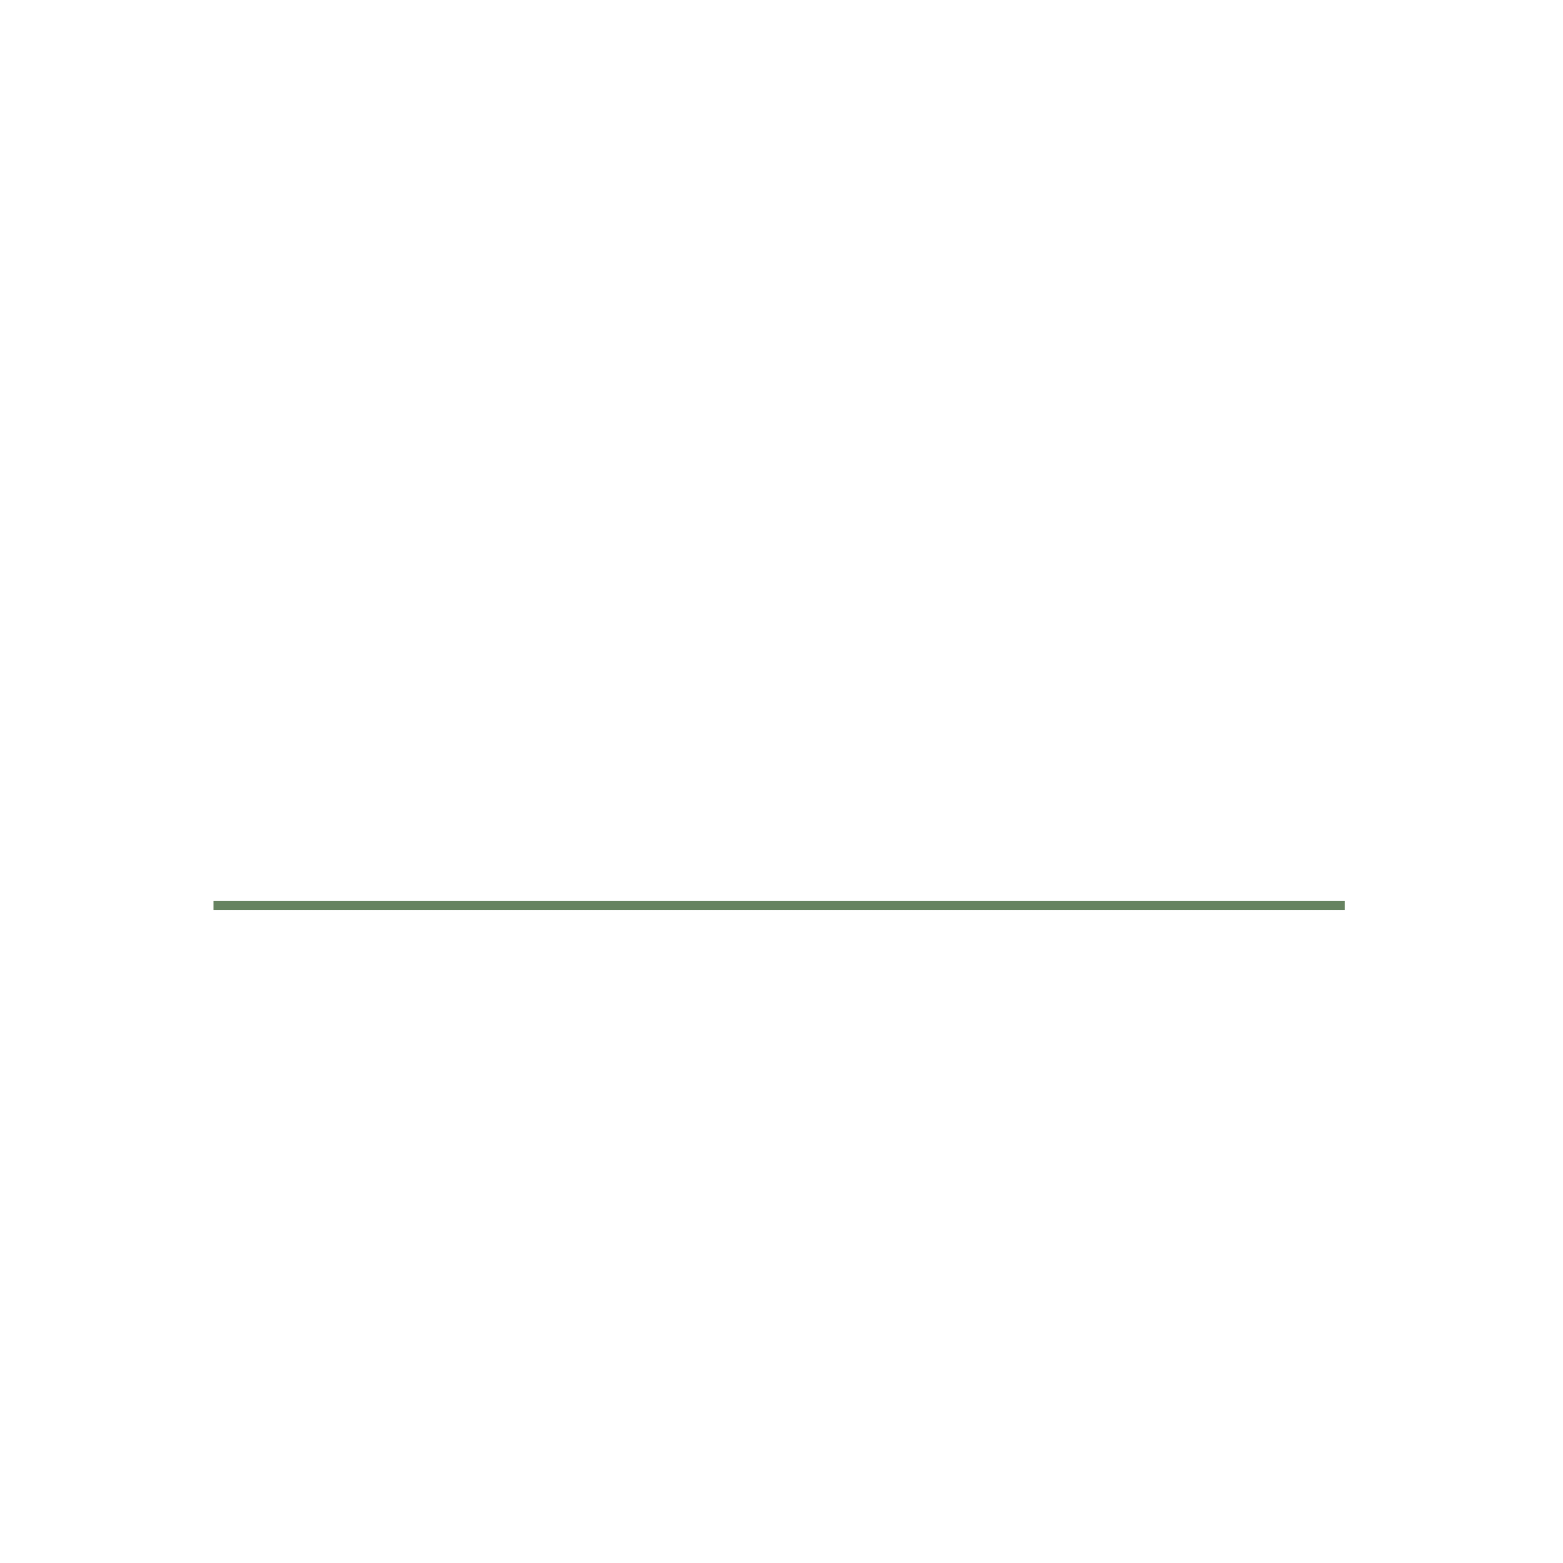 exclusive photography logo white